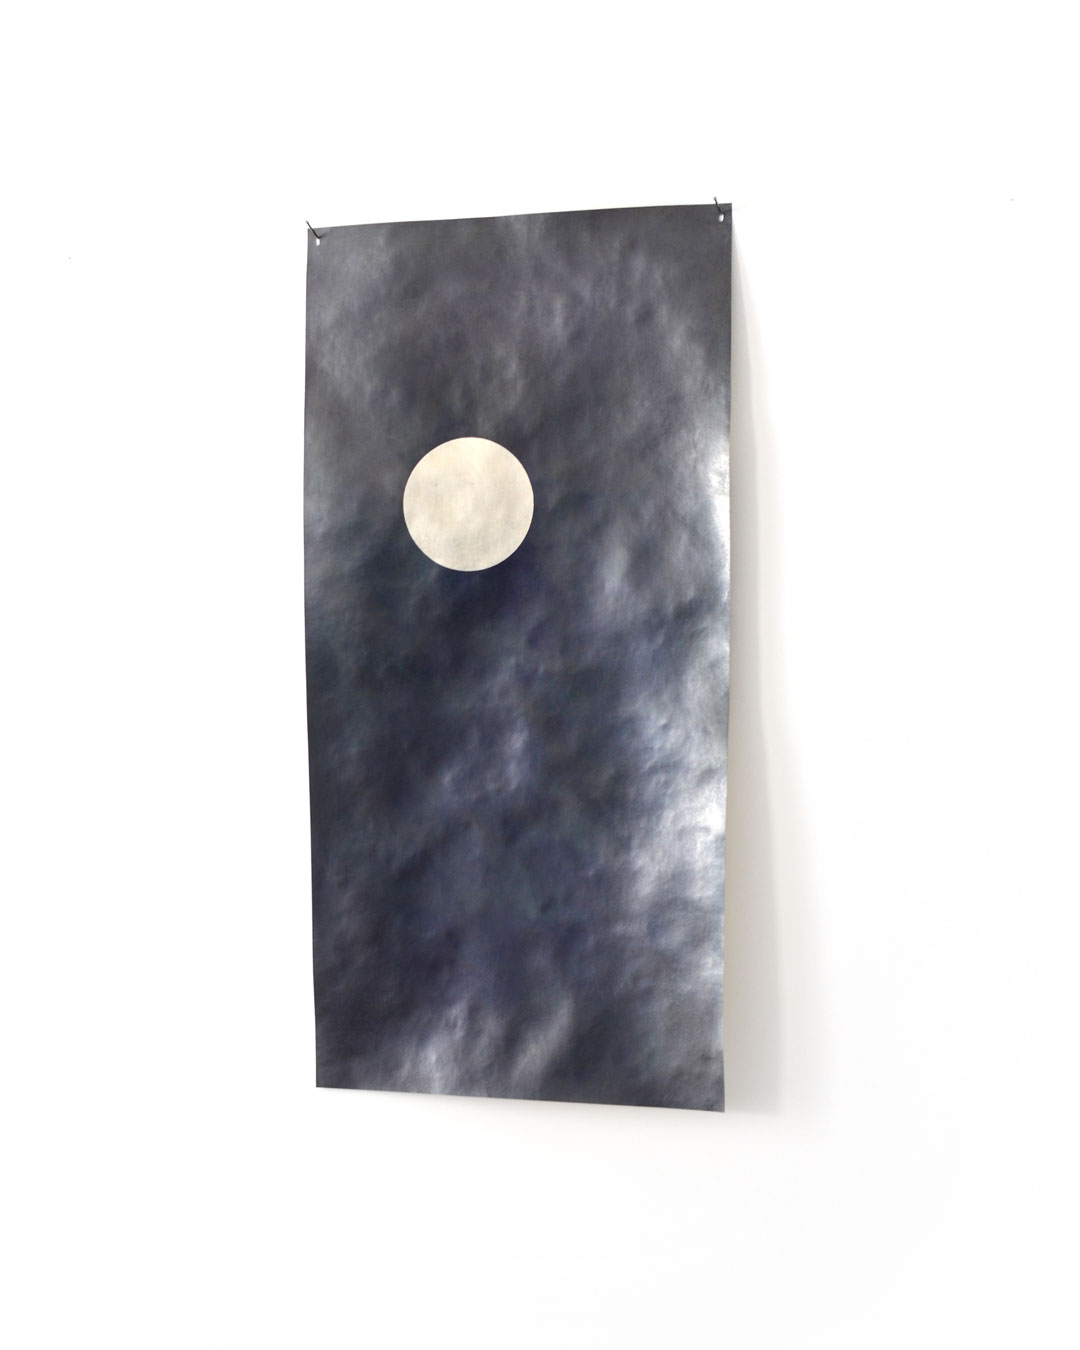 David Huycke, New Moon, 2019, wall object; silver, 1000 x 500 x 0.3 mm, €8500